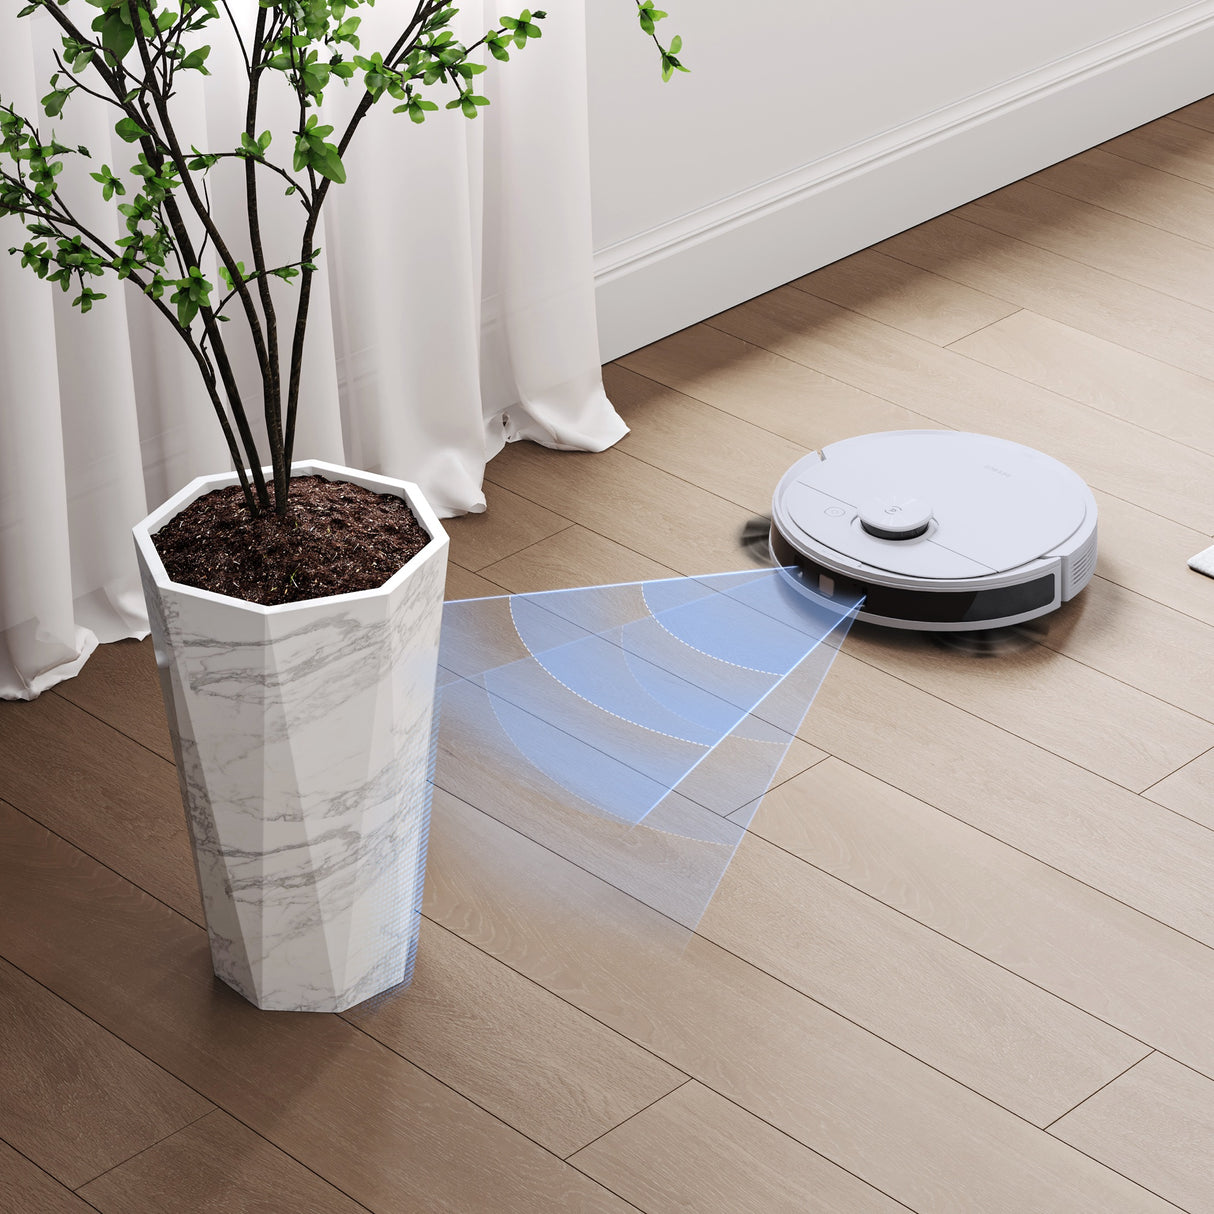 DEEBOT N8 PRO+ Robot Vacuum Cleaner - dToF LiDAR, 110min Runtime